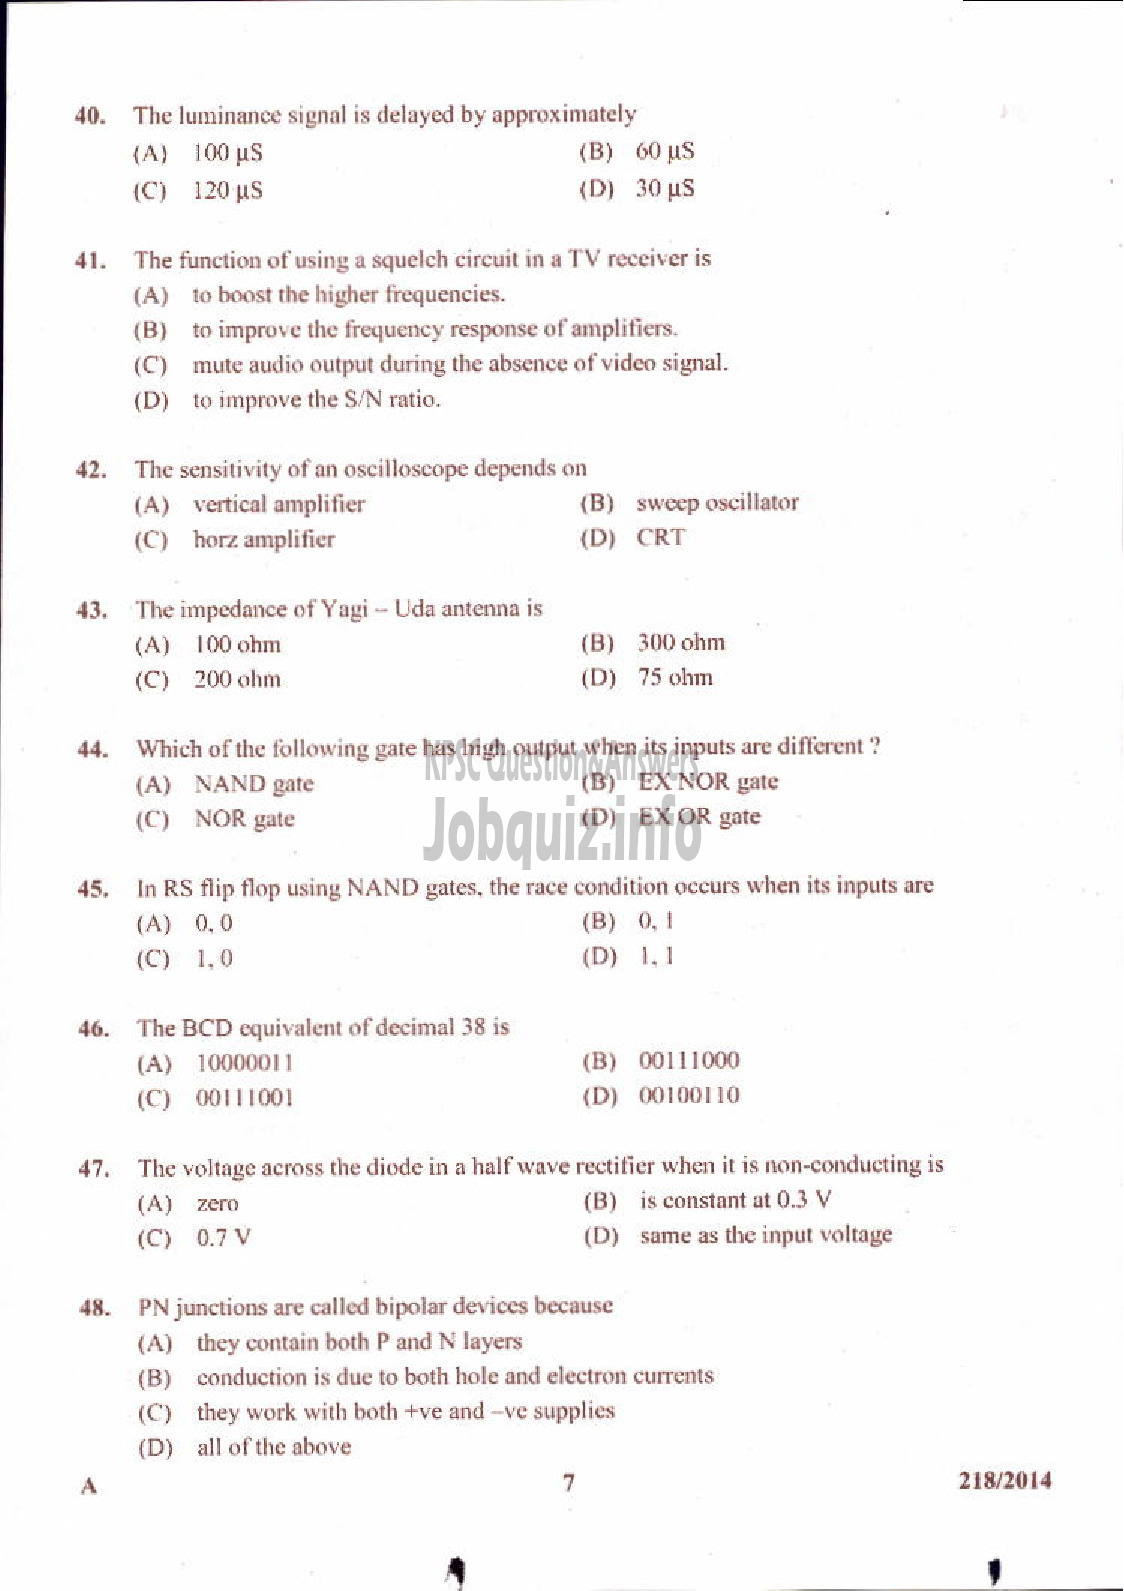 Kerala PSC Question Paper - LABORATORY TECHNICAL ASSISTANT MRRTV VHSE-7